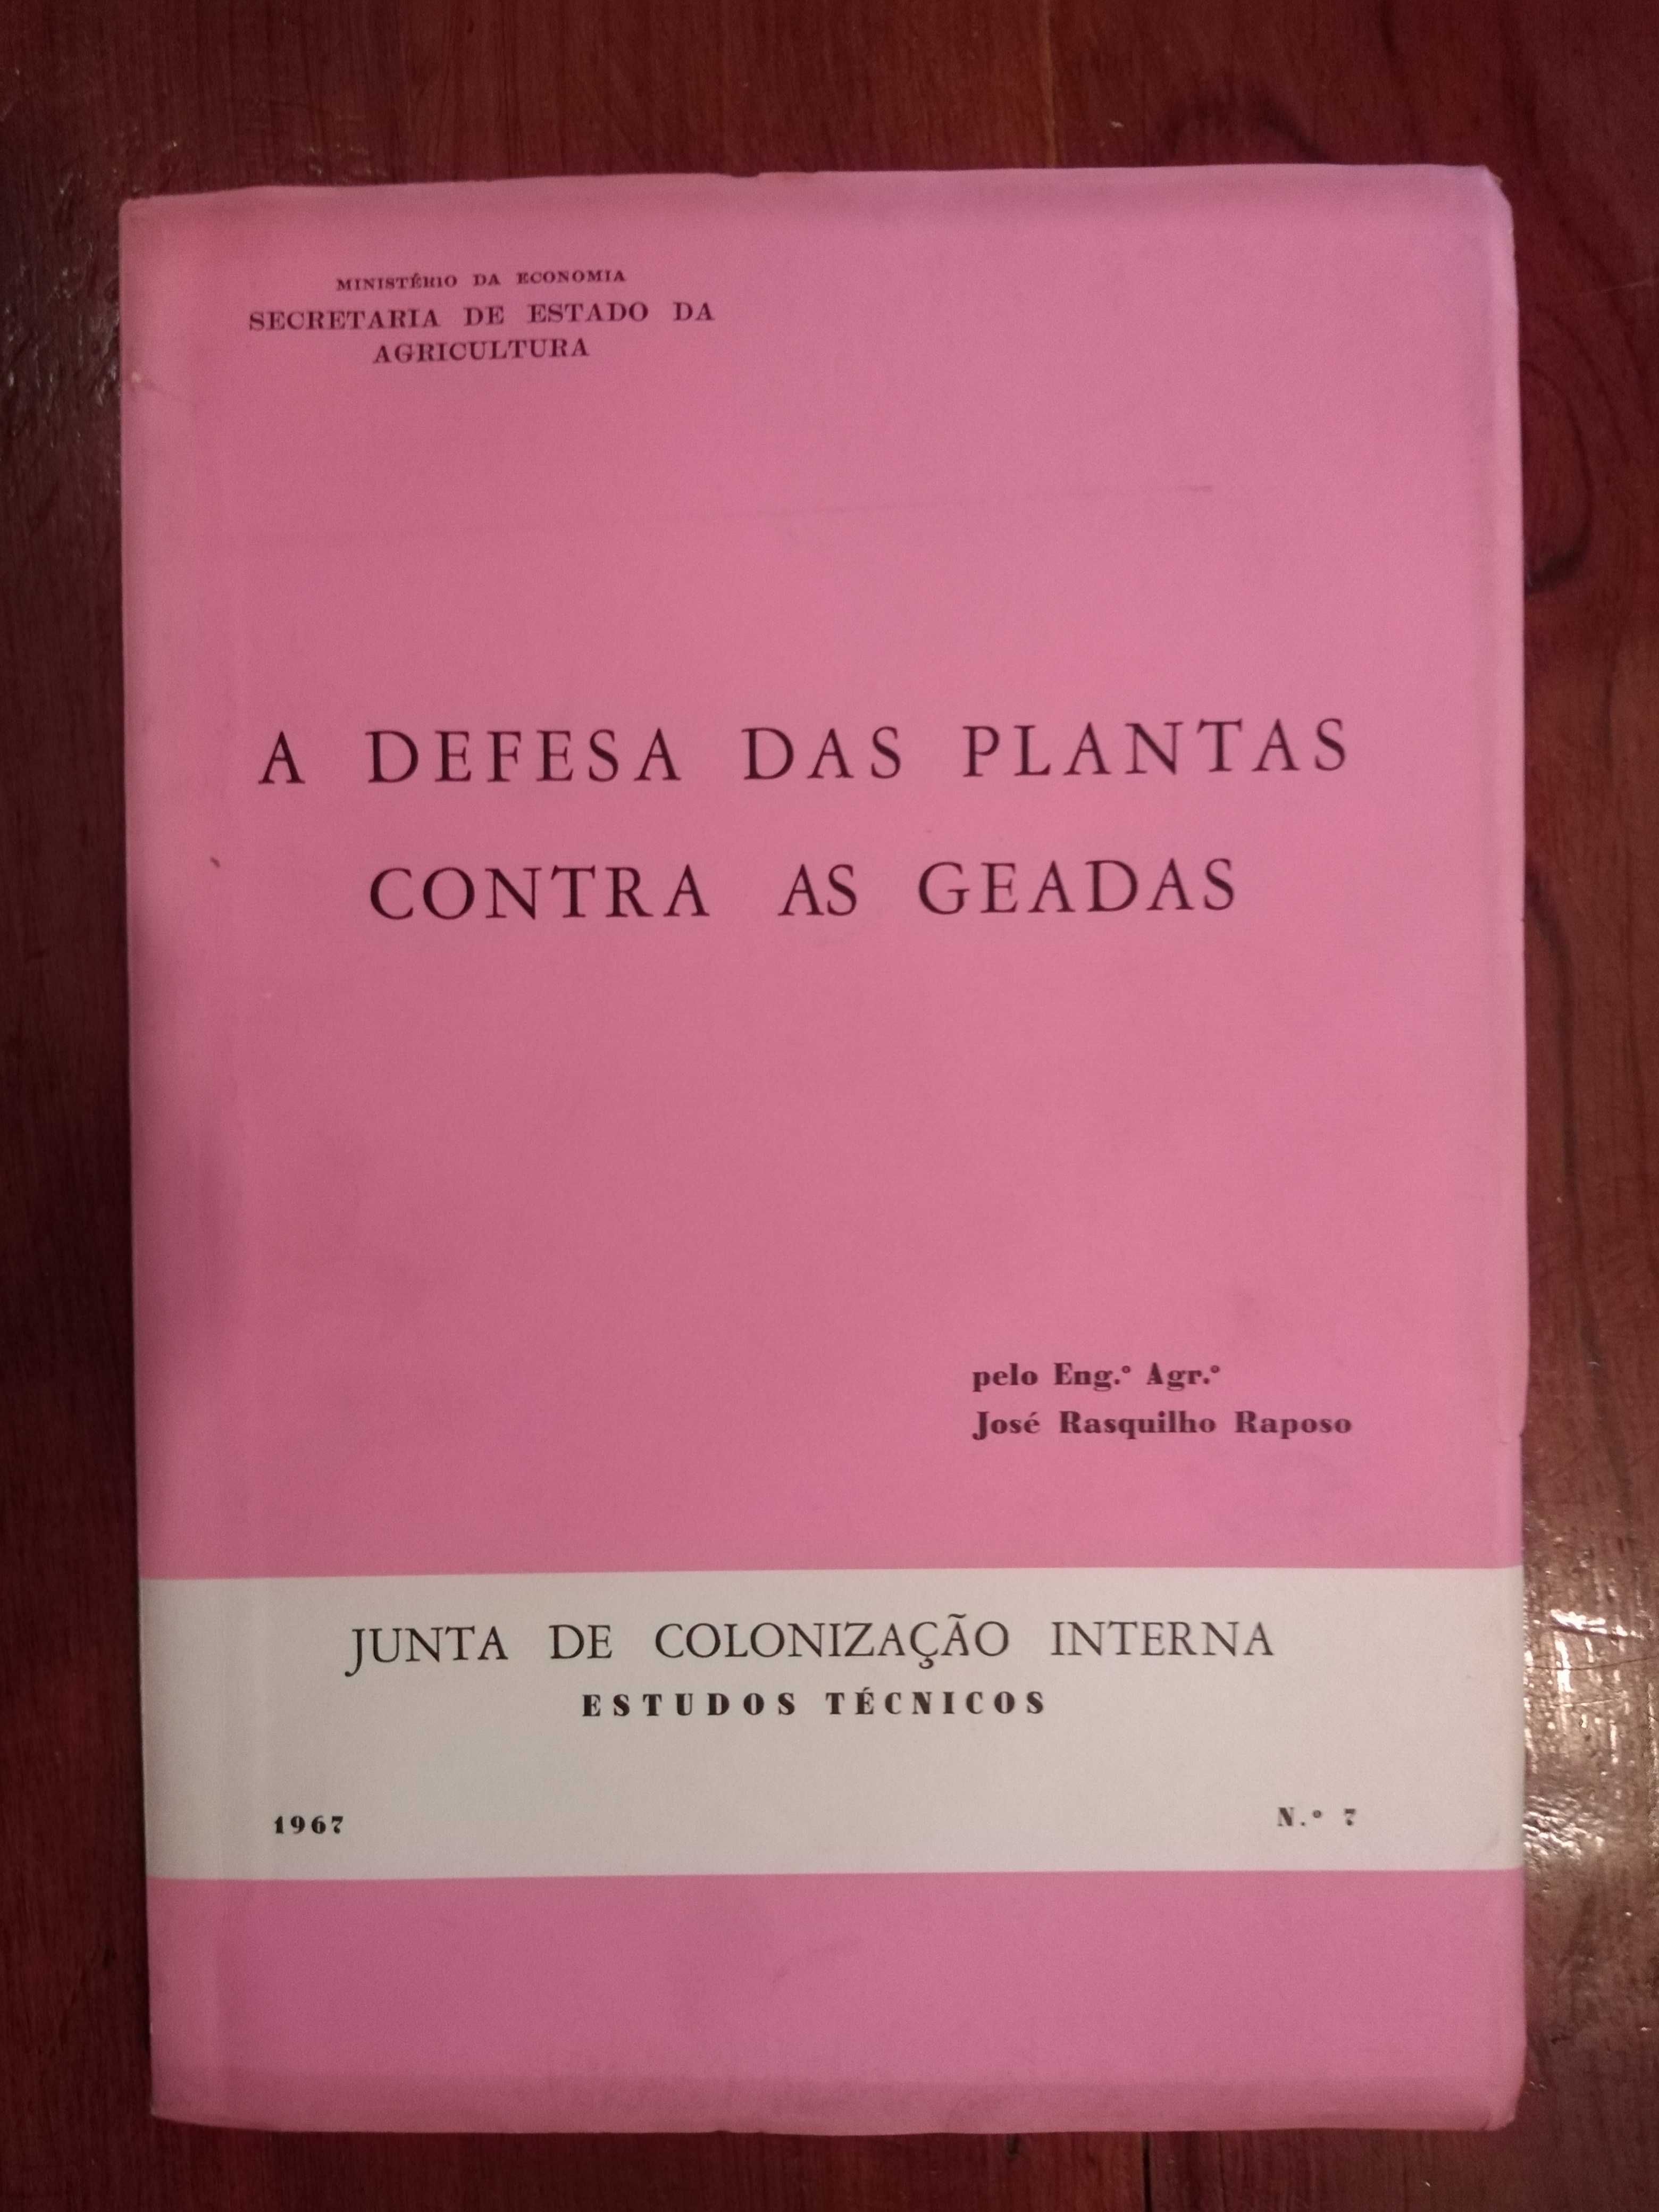 José Rasquilho Raposo - A defesa das plantas contra as geadas